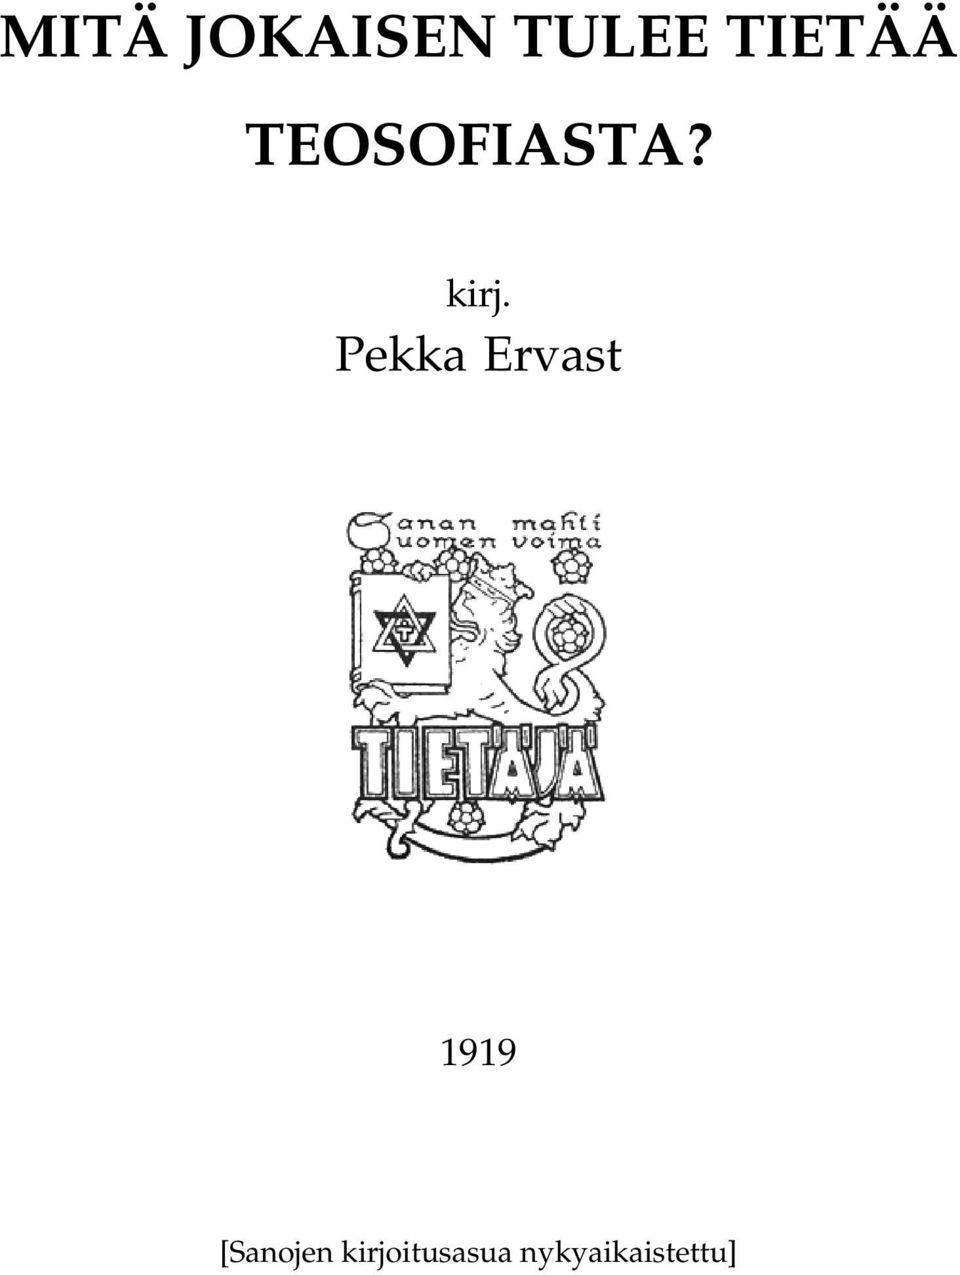 Pekka Ervast 1919